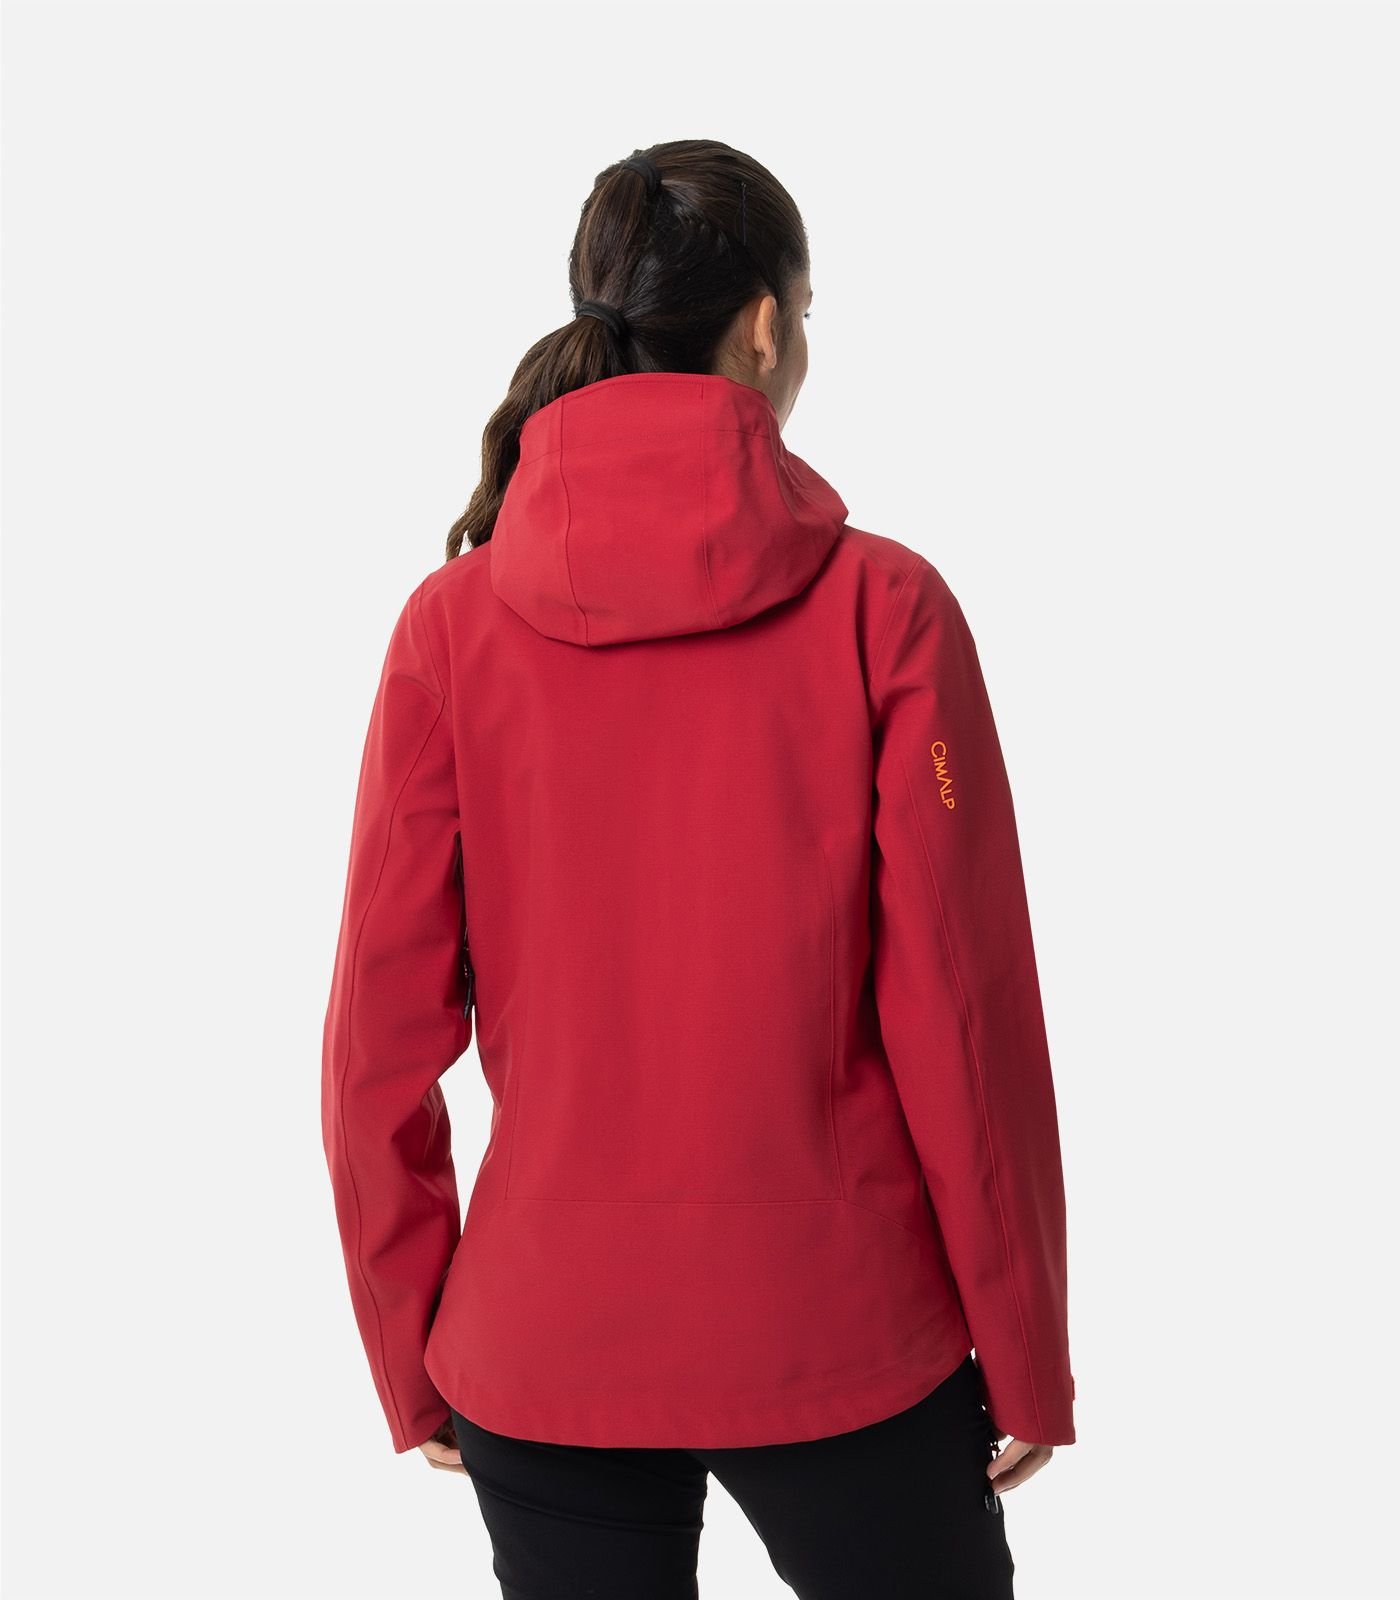 Ultrashell® hiking jacket